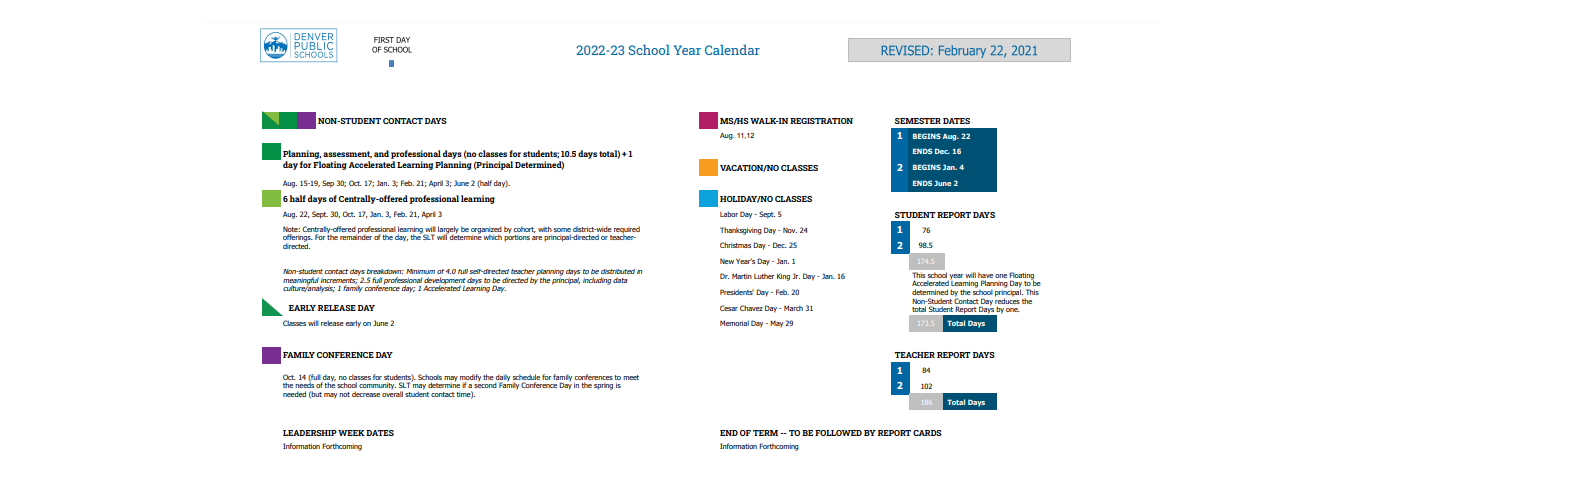 District School Academic Calendar Key for P.S.1 Charter School